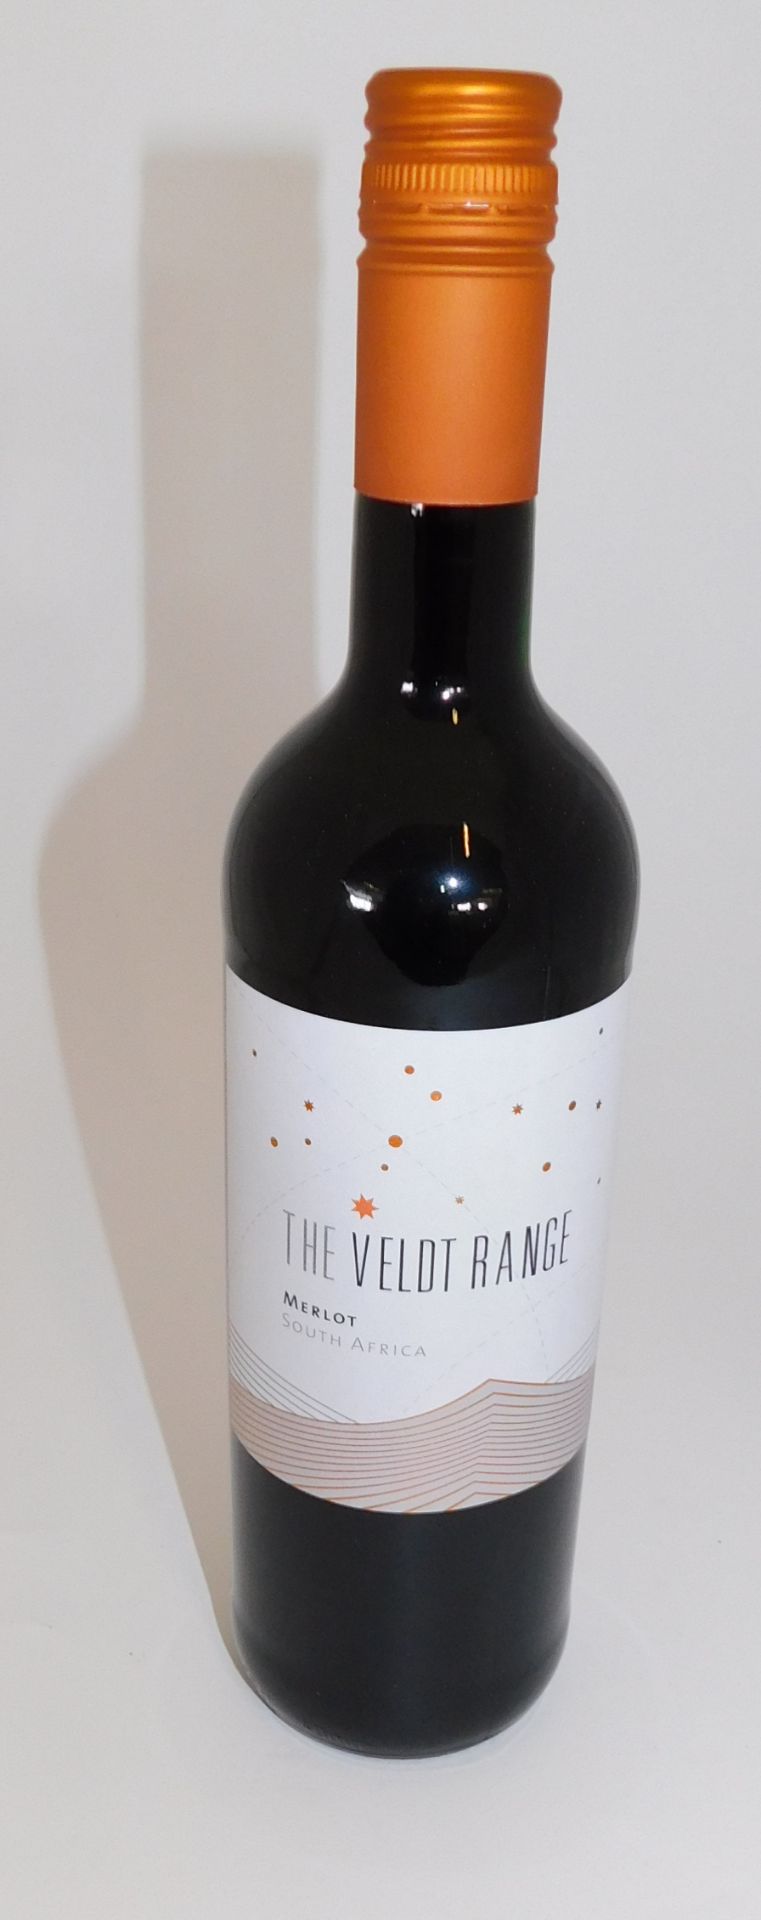 24 Bottles of The Veldt Range Merlot, 75cl (Located Stockport – See General Notes for More Details)